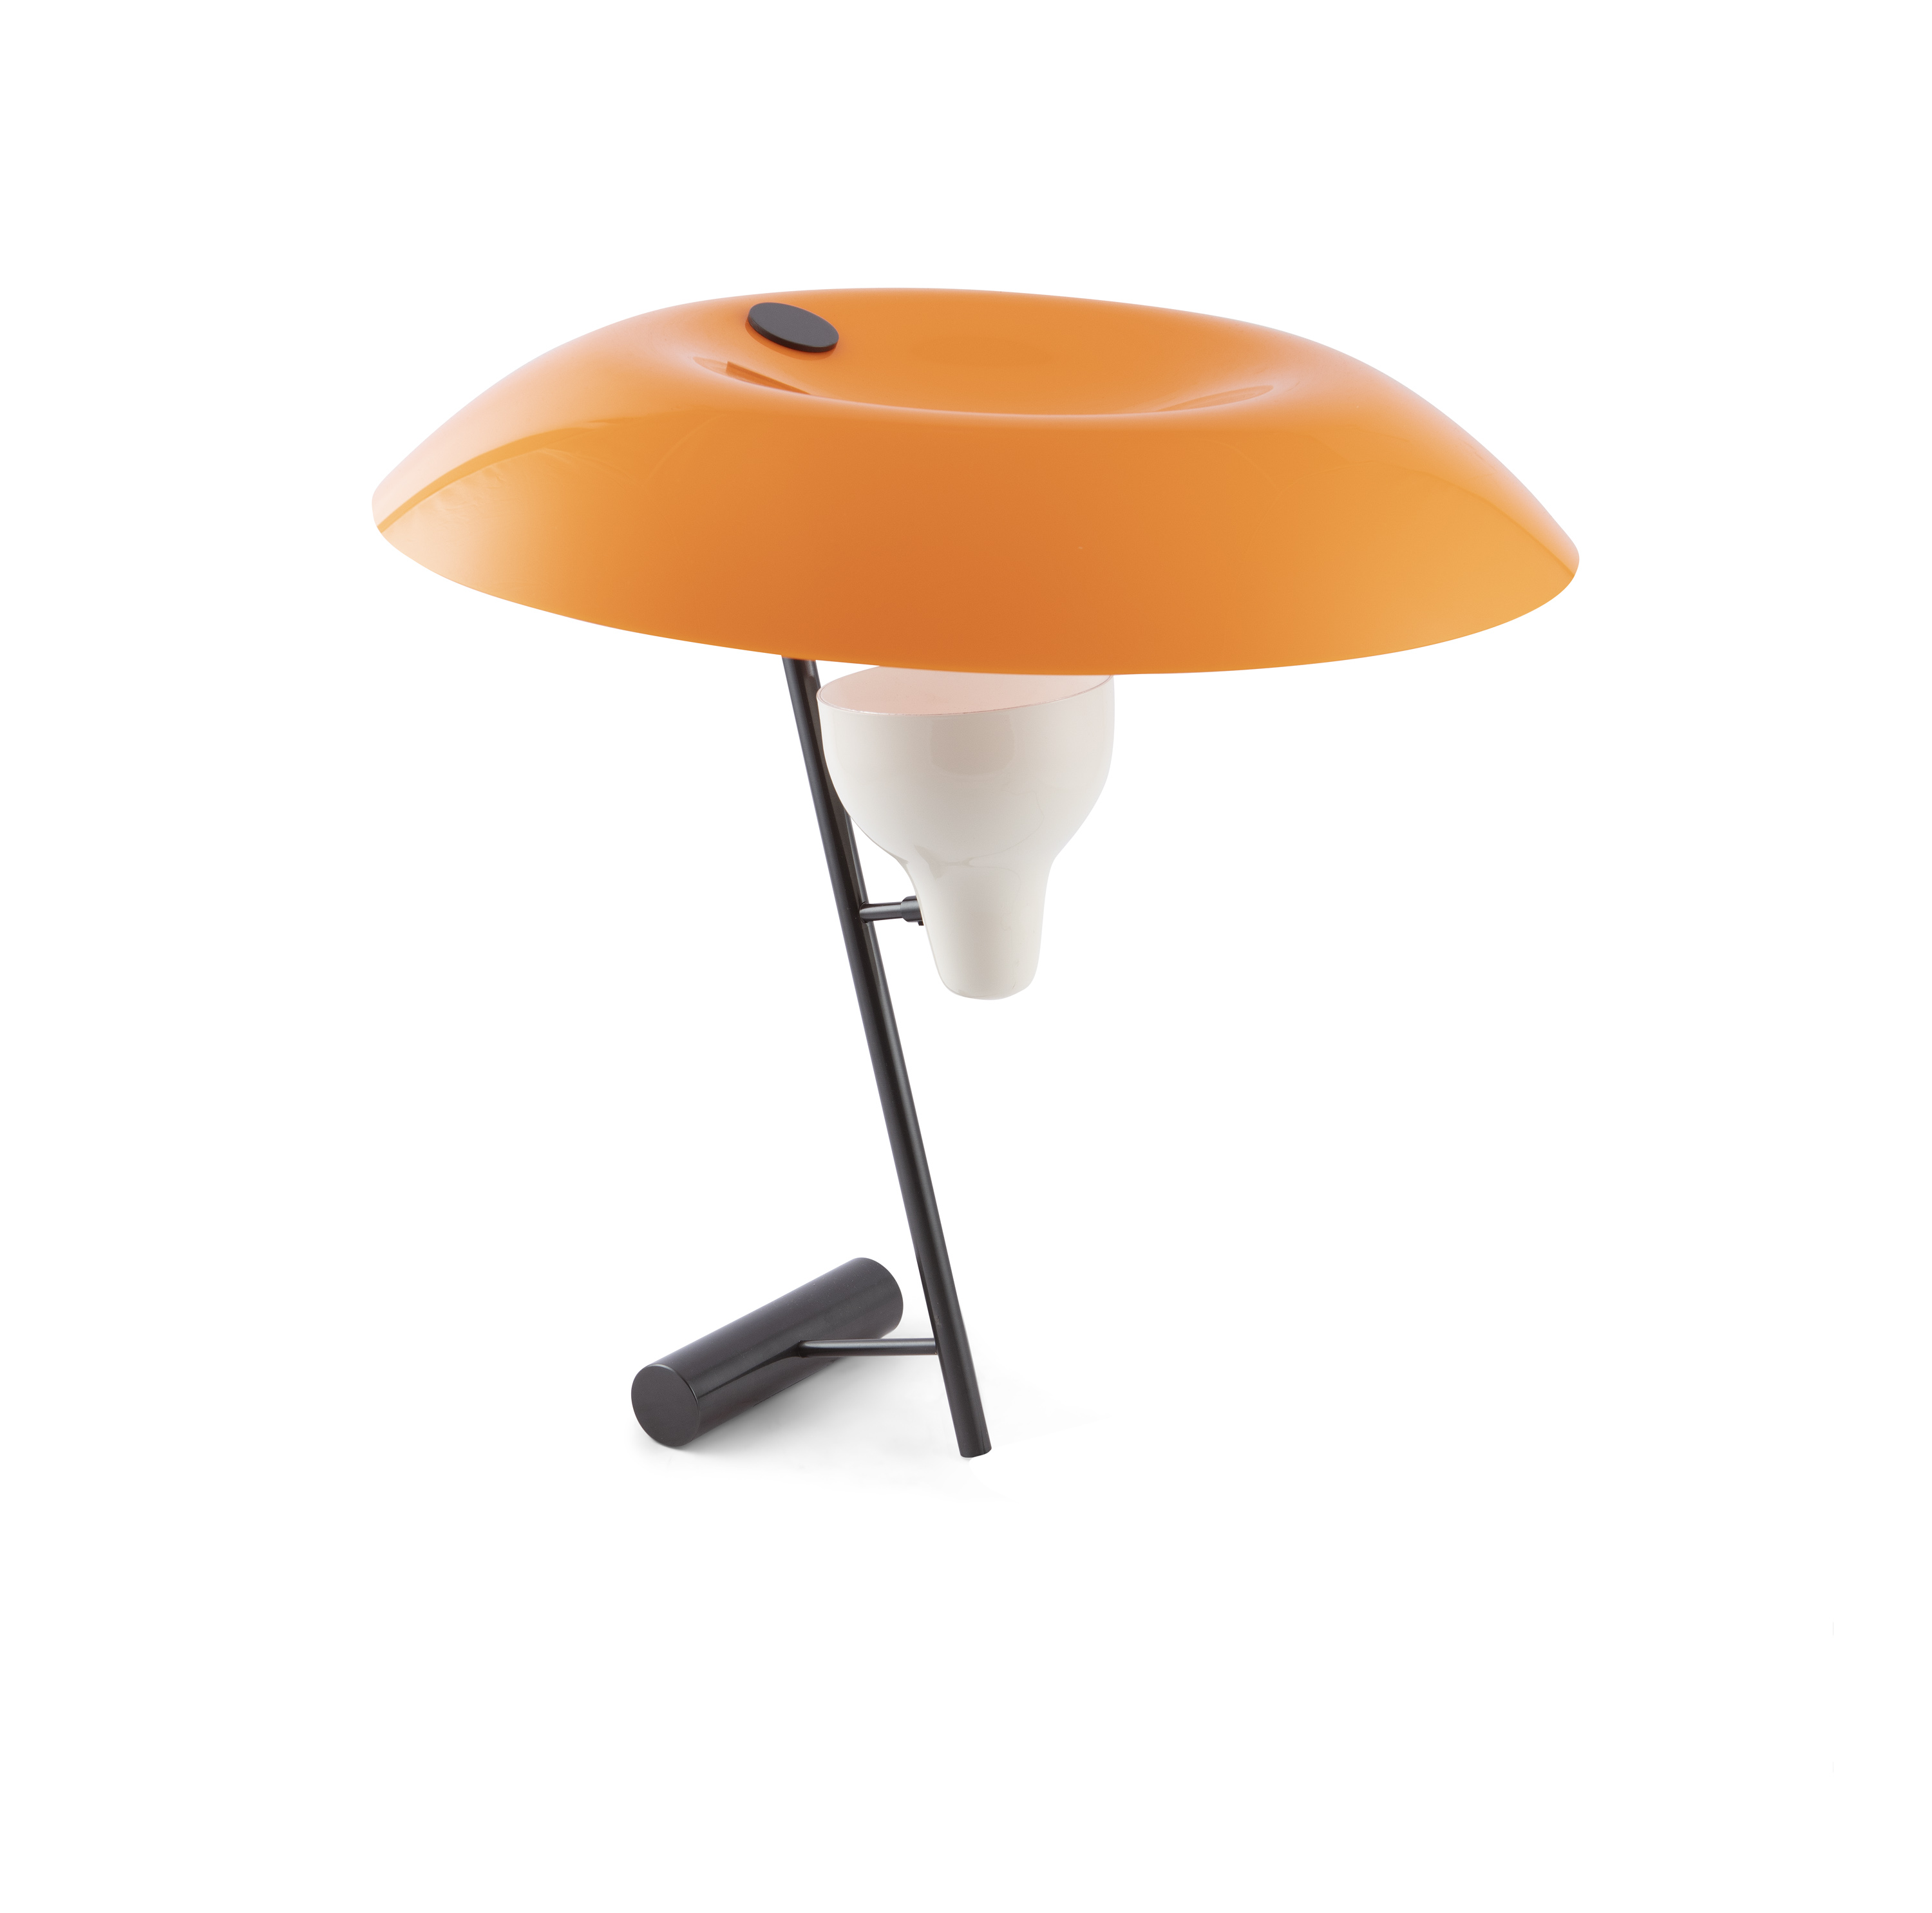 GINO SARFATTI A 'Model 548' table lamp designed by Gino Sarfatti for Flos, Italy. 49 x 50 x 50cm - Image 3 of 4